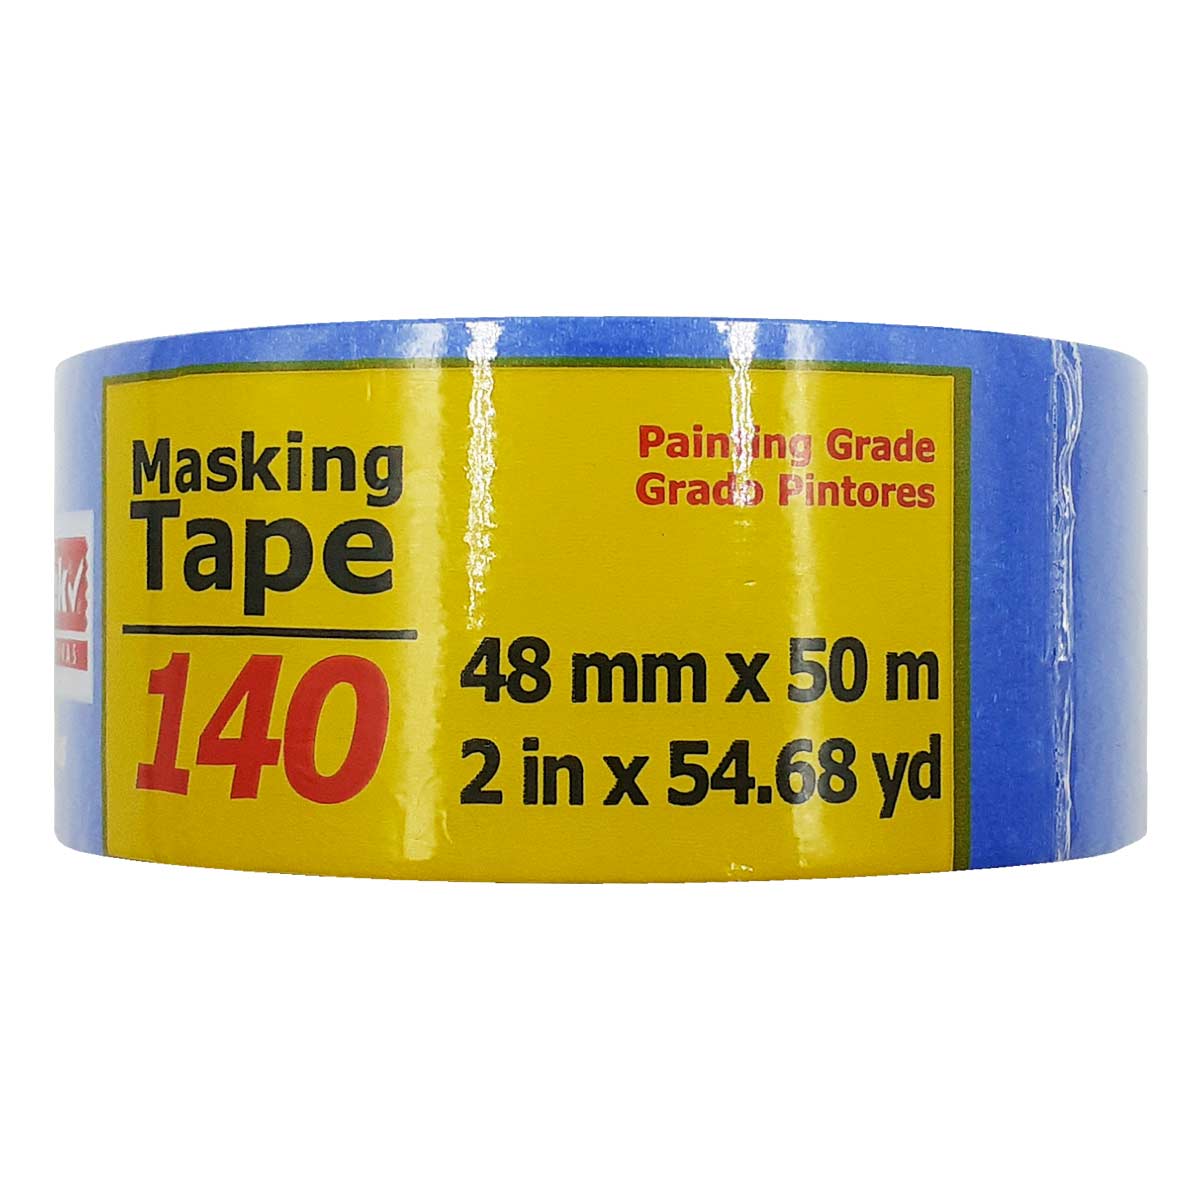 Masking Tape Azul 14 Dias Navitek 140 Para Pintar 48mm x 50m NAVITEK Ferreabasto